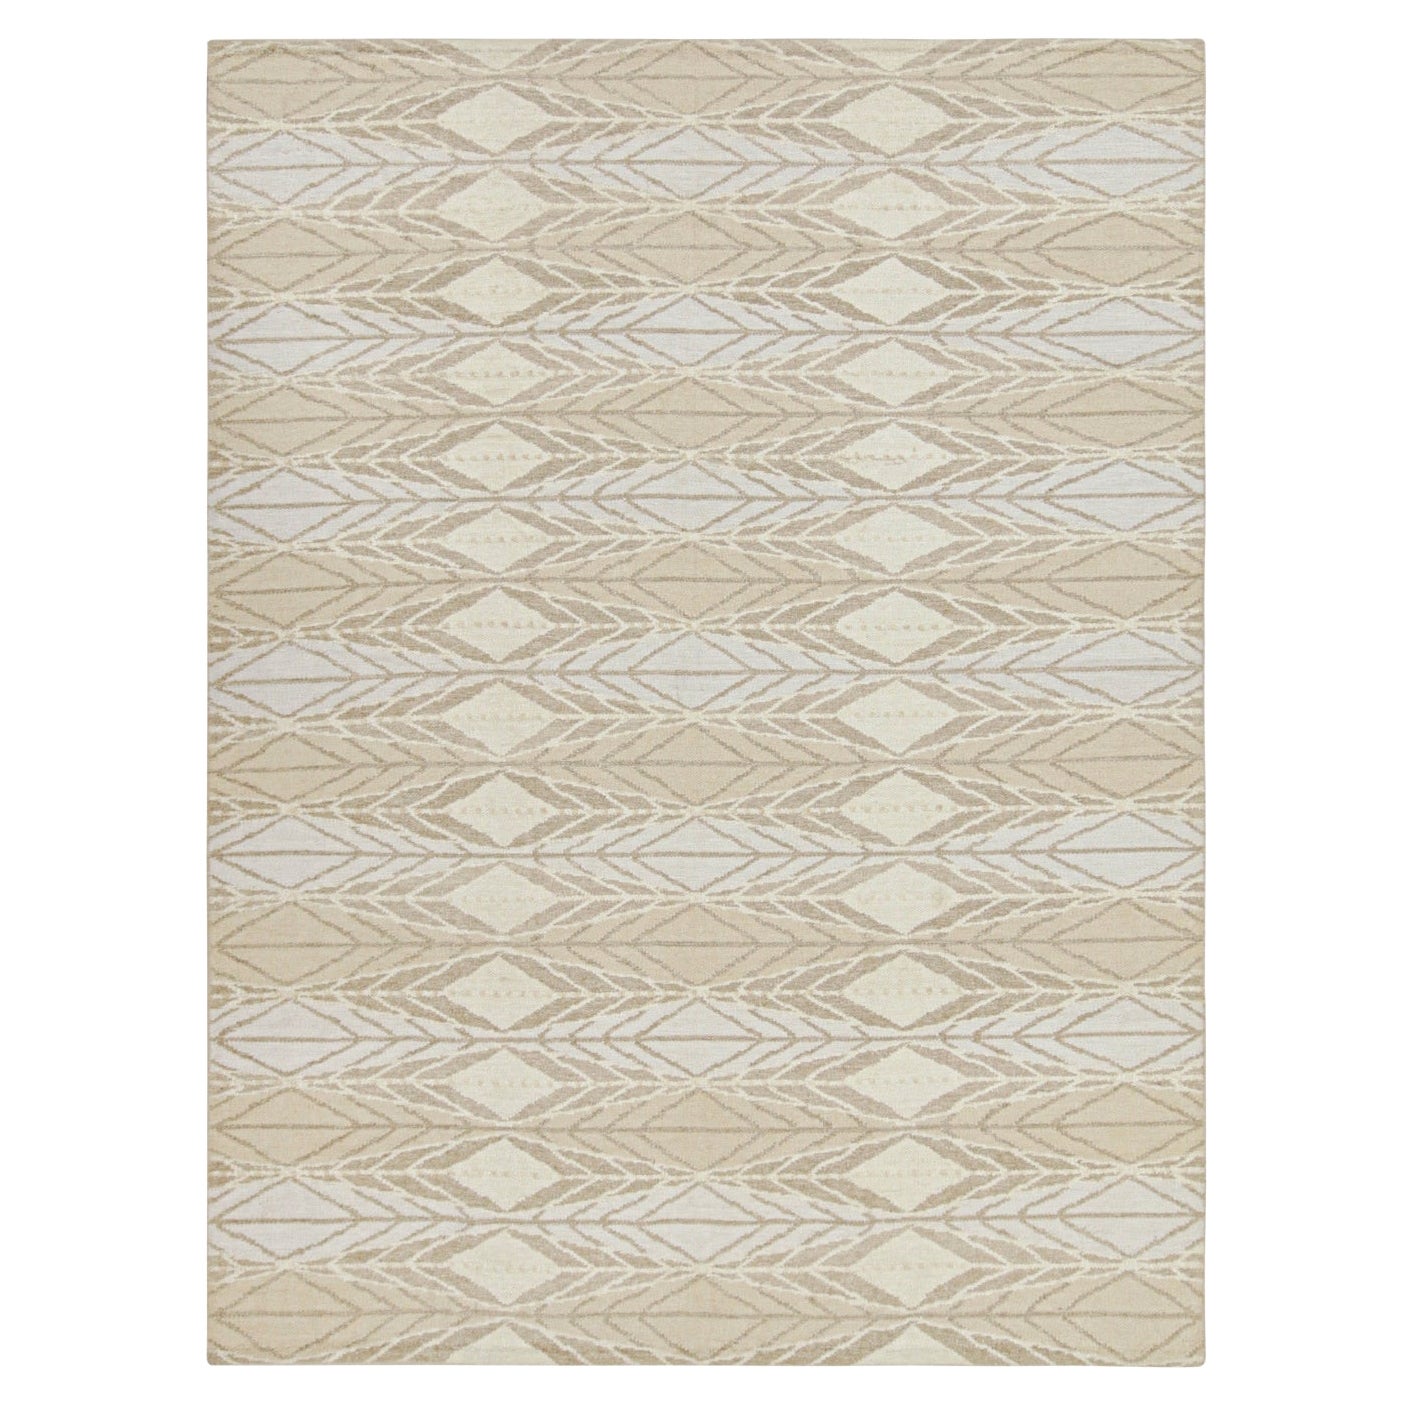 Rug & Kilim’s Scandinavian Style Kilim in Beige-Brown & White Geometric Pattern For Sale